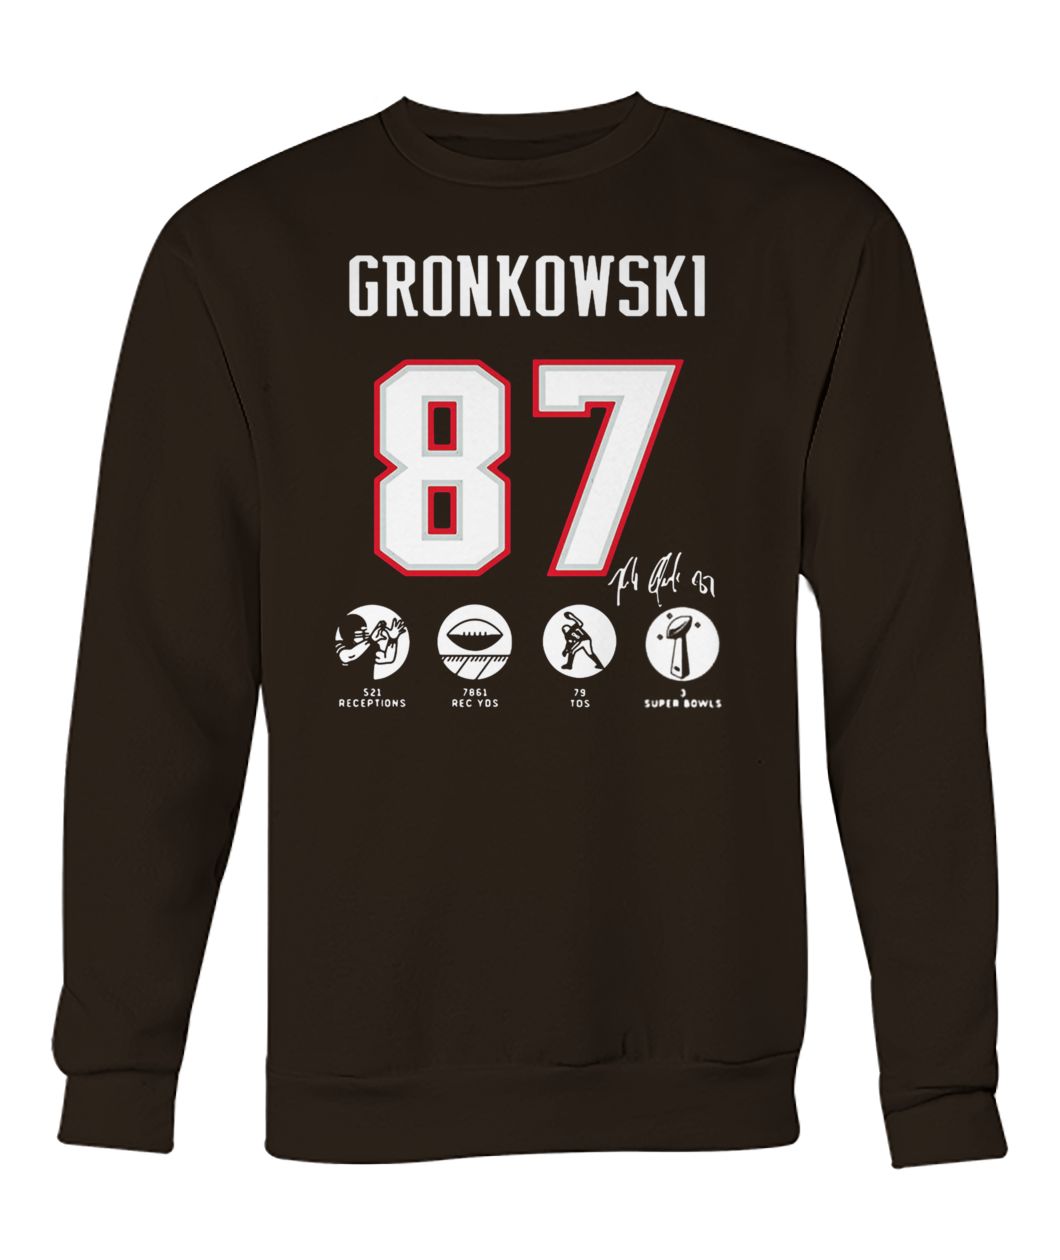 NFL rob gronkowski 87 521 receptions 7861 rec yds 79 tds 3 super bowls crew neck sweatshirt